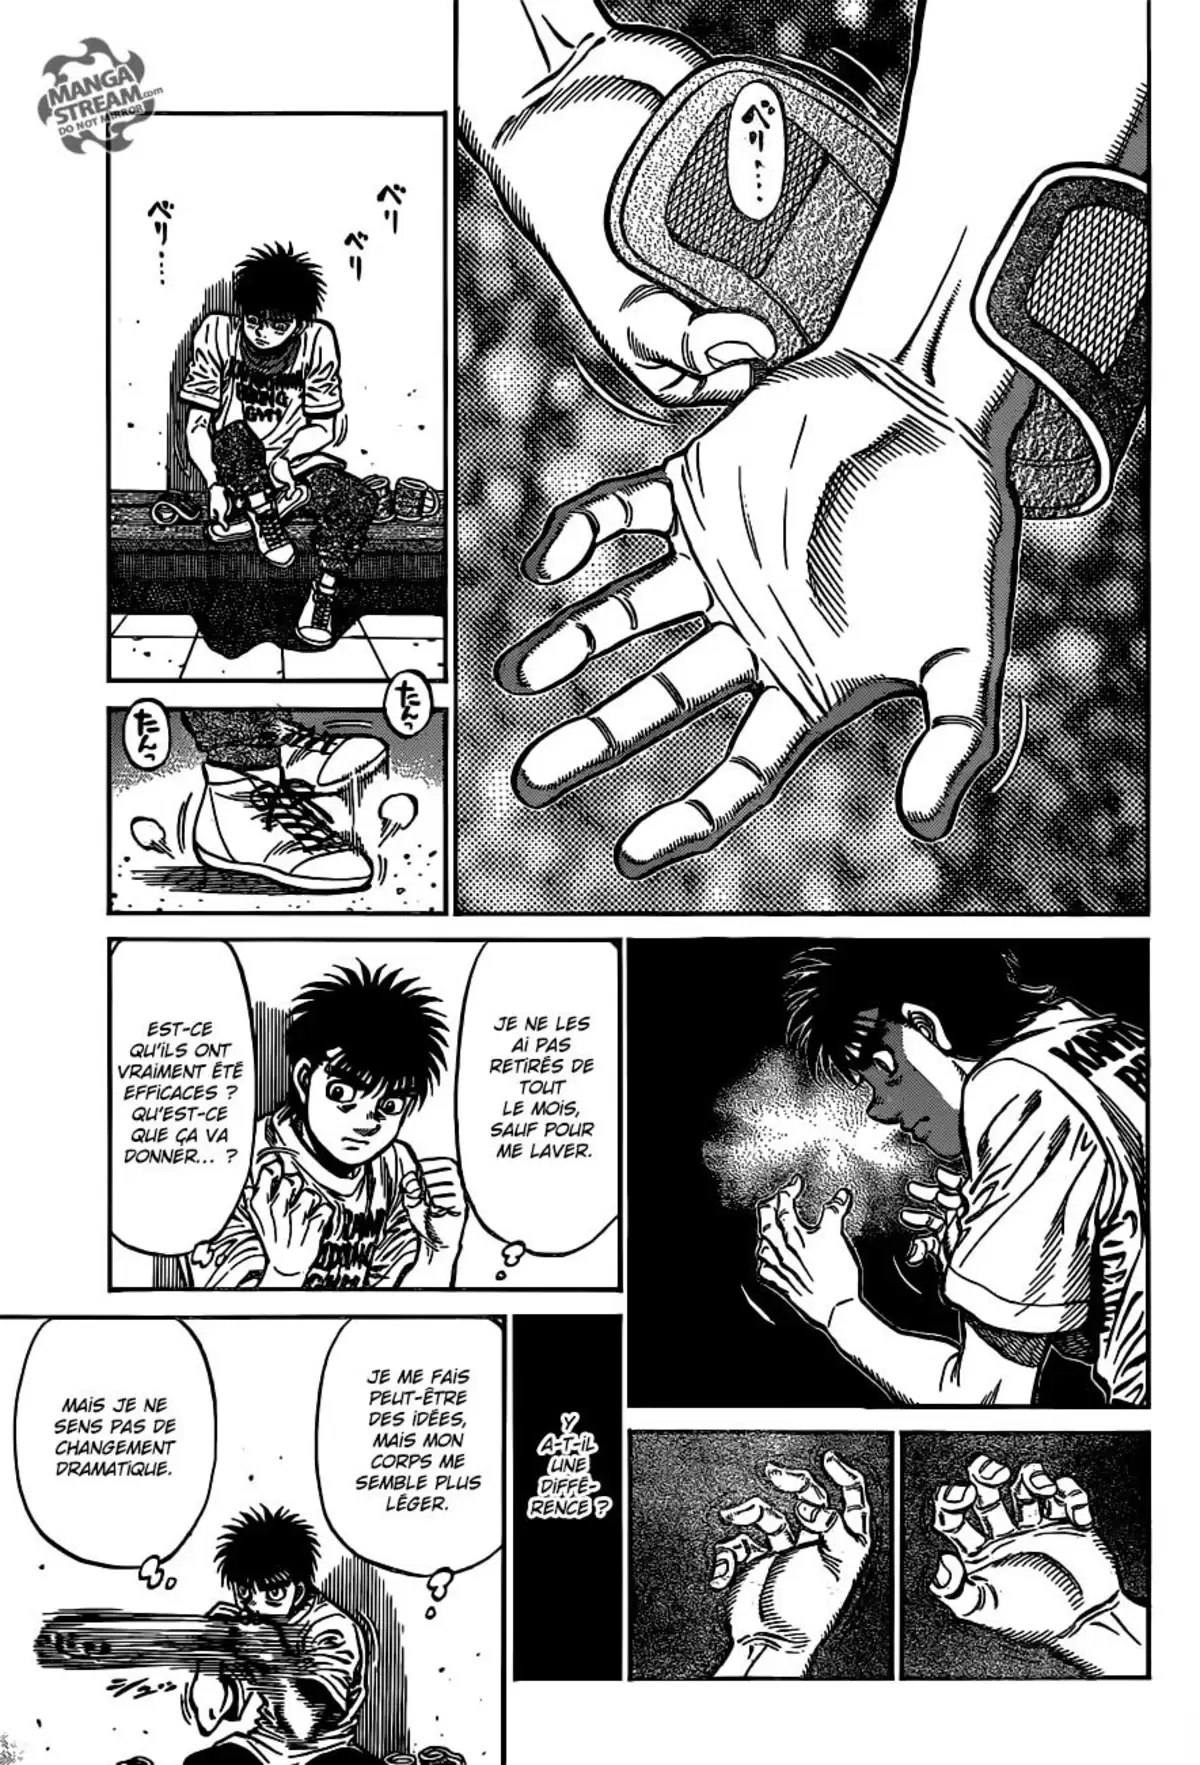 Hajime no Ippo Volume 117 page 3